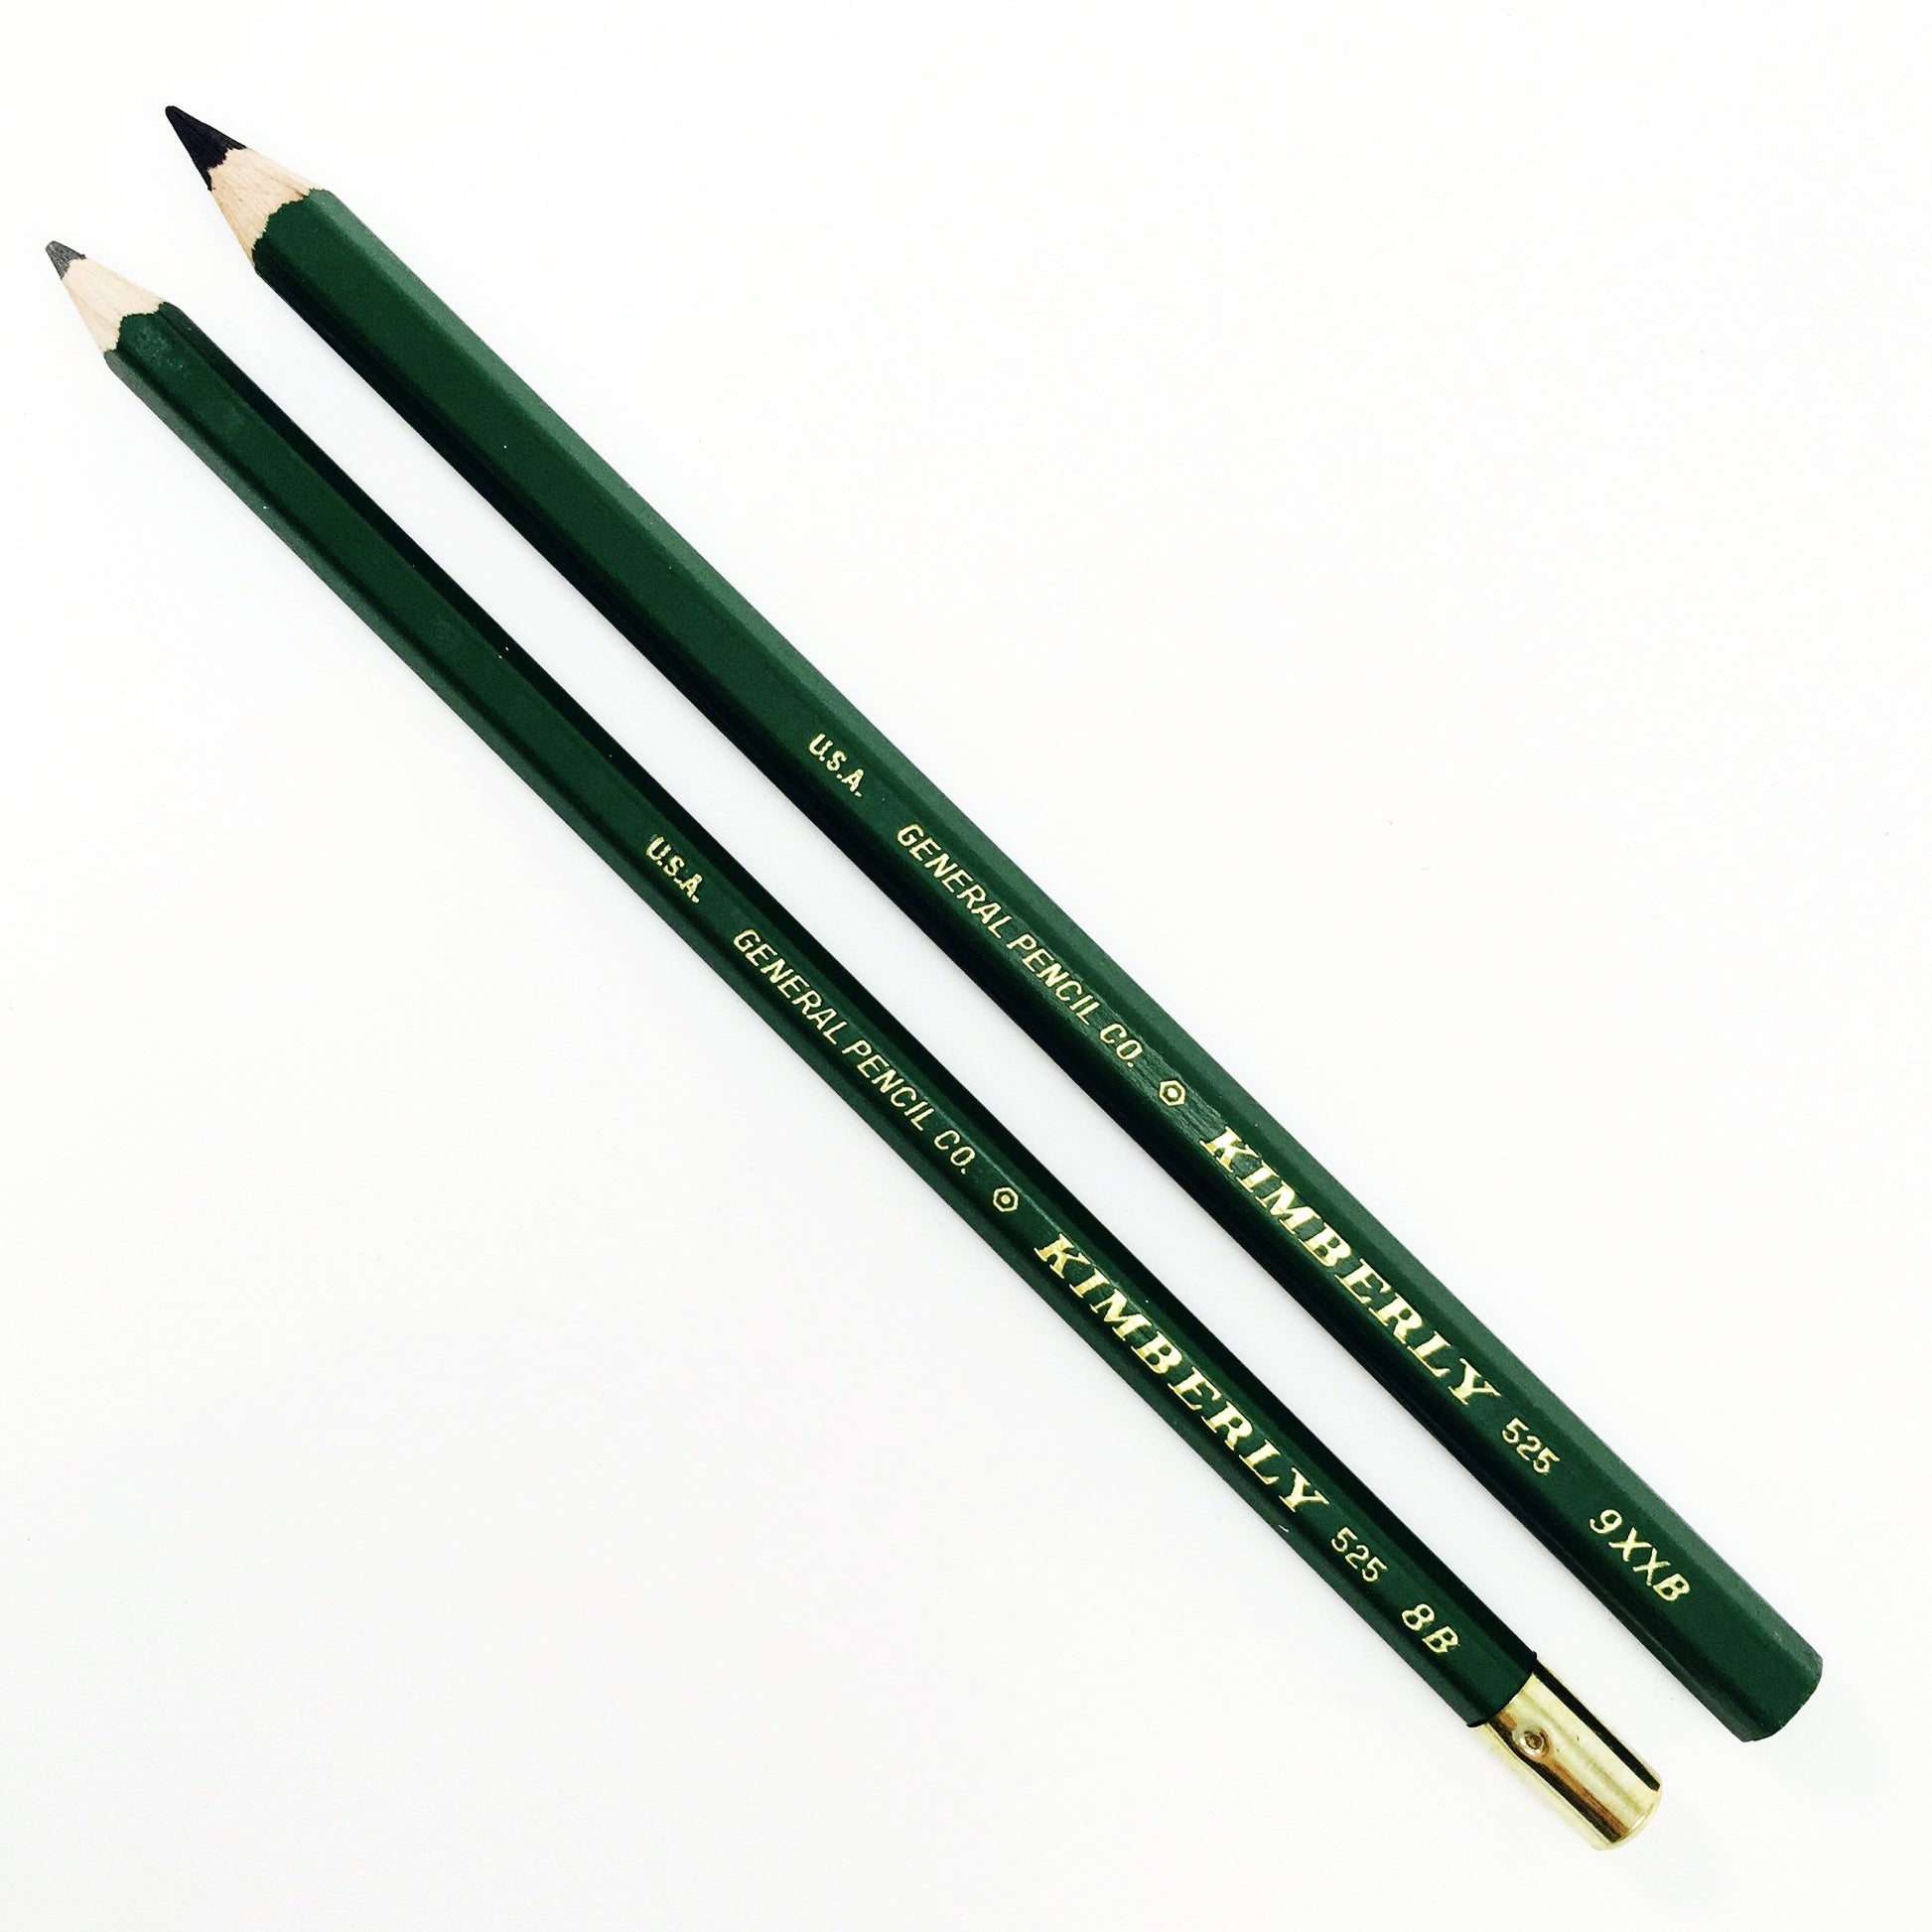 General Pencil Kimberly Drawing Pencil, 2-Pencil Set, 4B